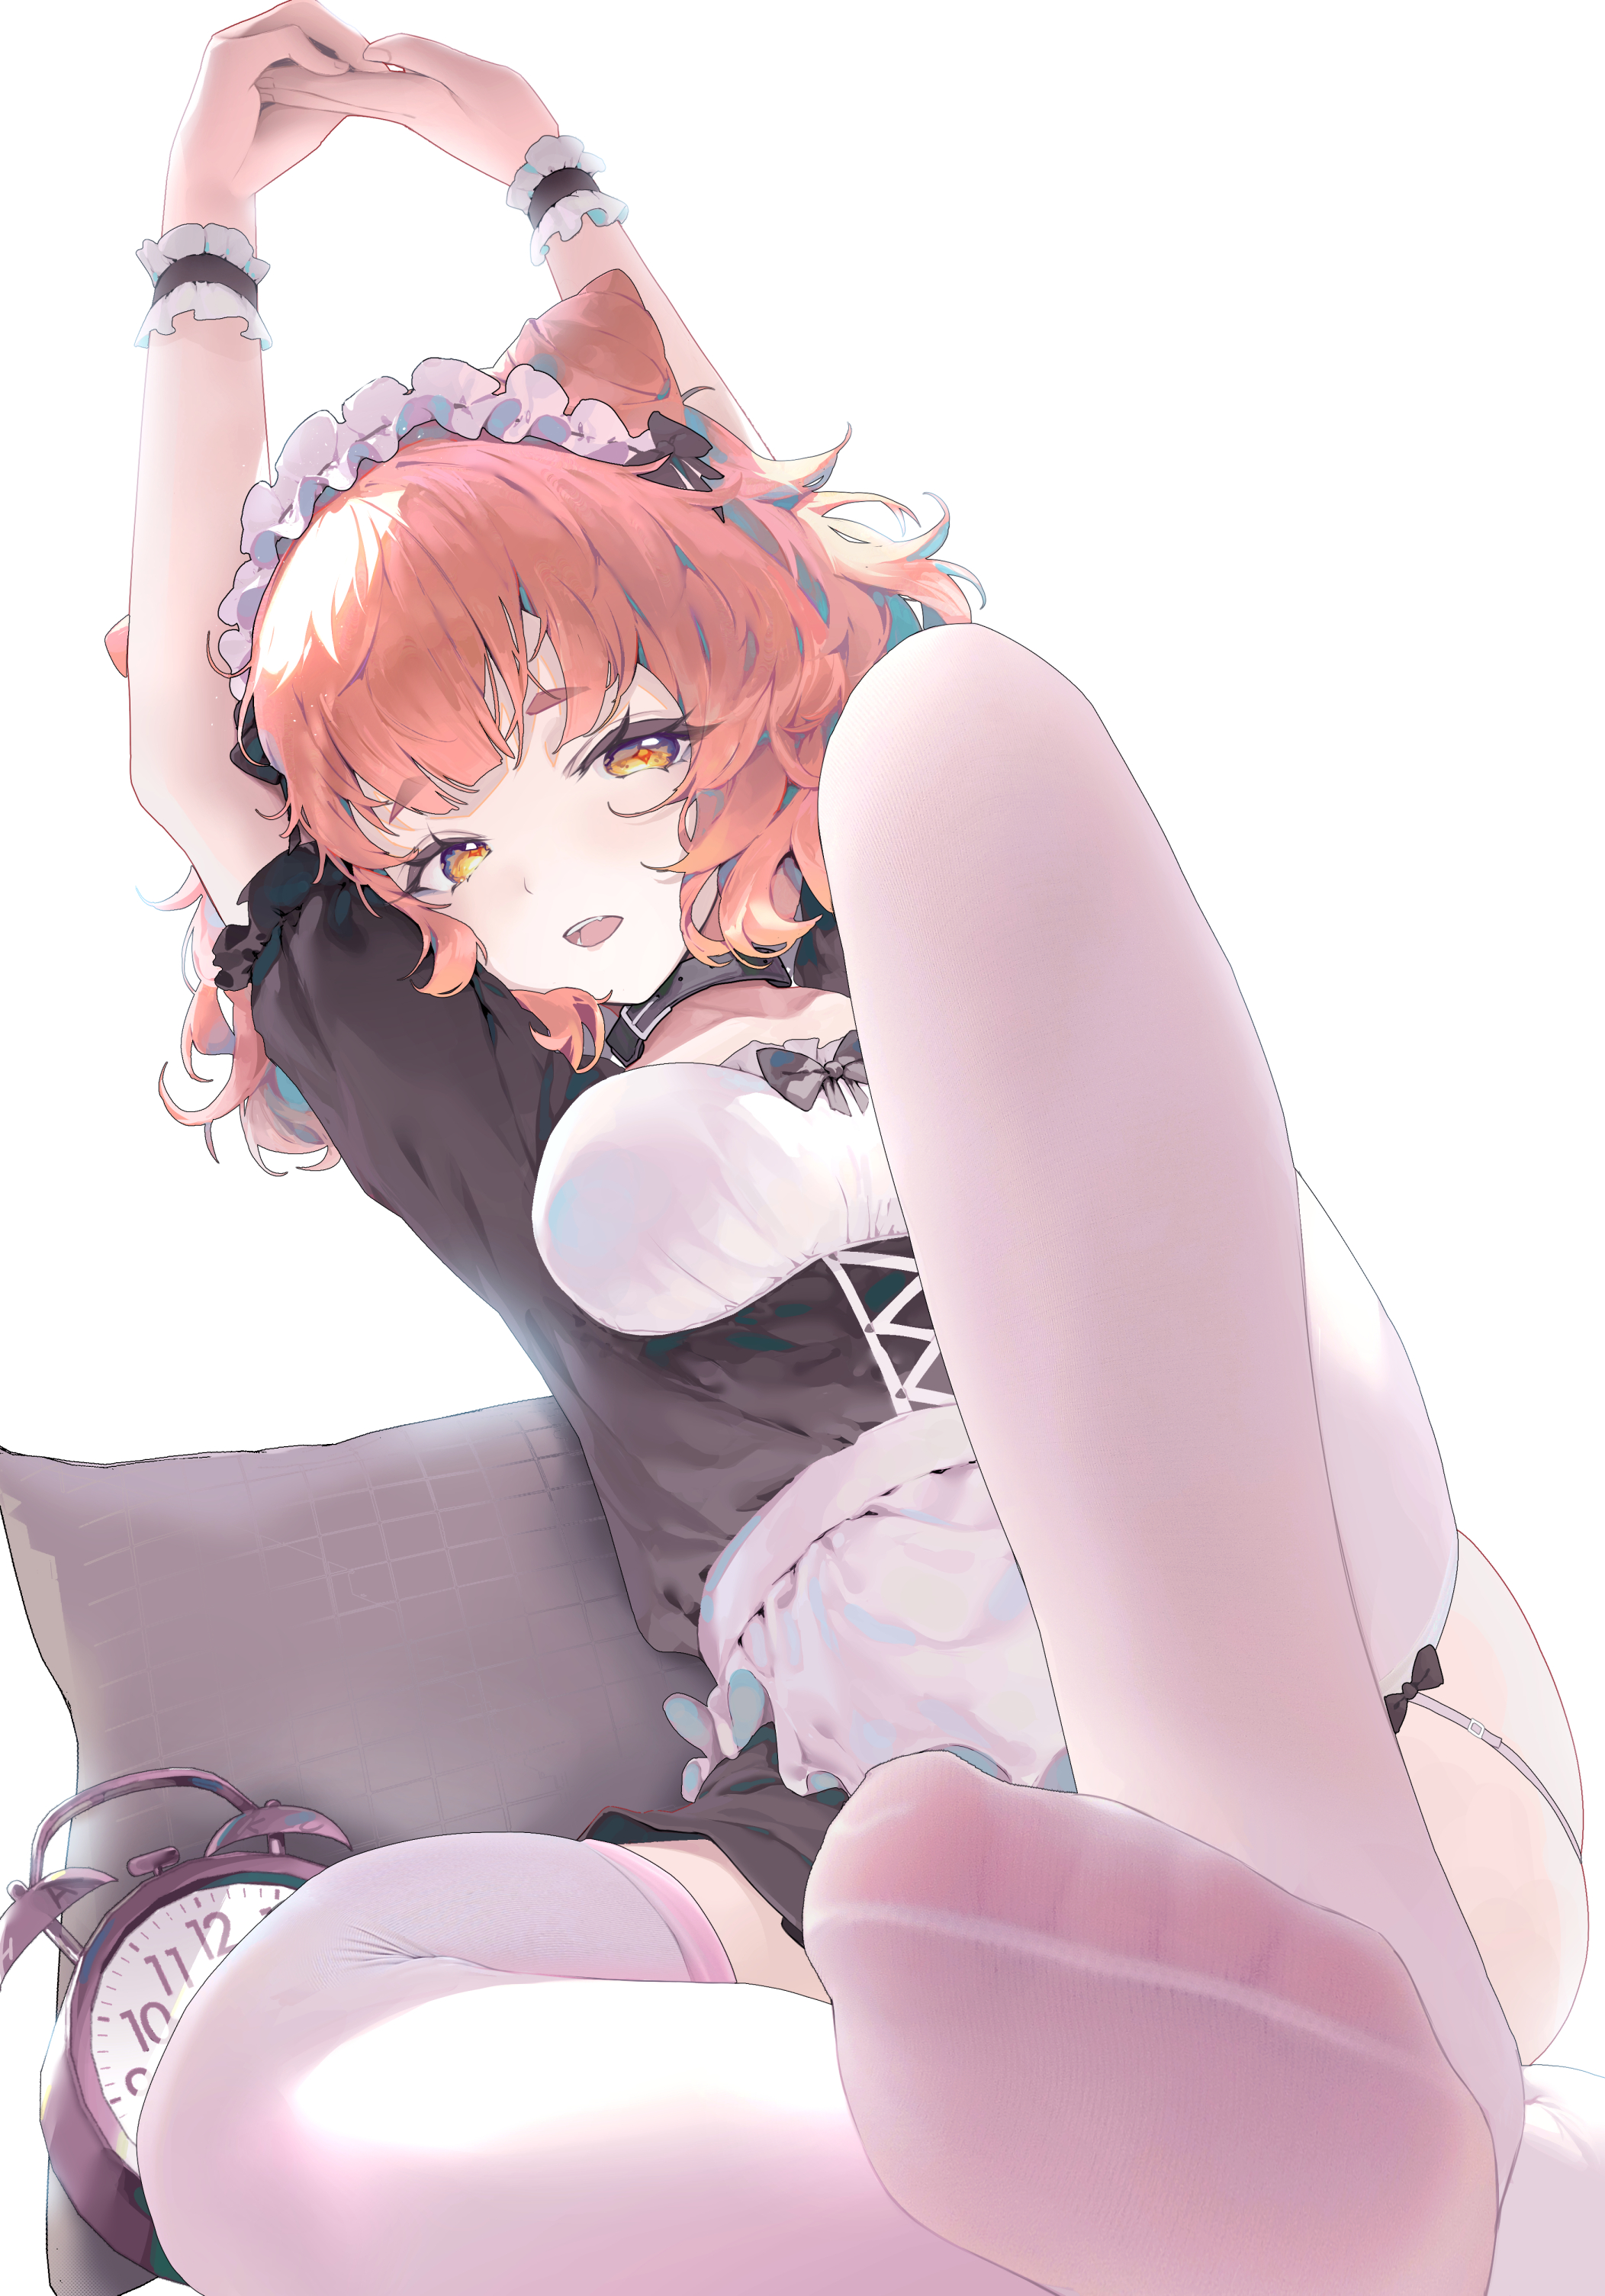 Anime 2104x3010 anime anime girls portrait display maid maid outfit redhead hairbun stockings feet clocks looking at viewer Pixiv